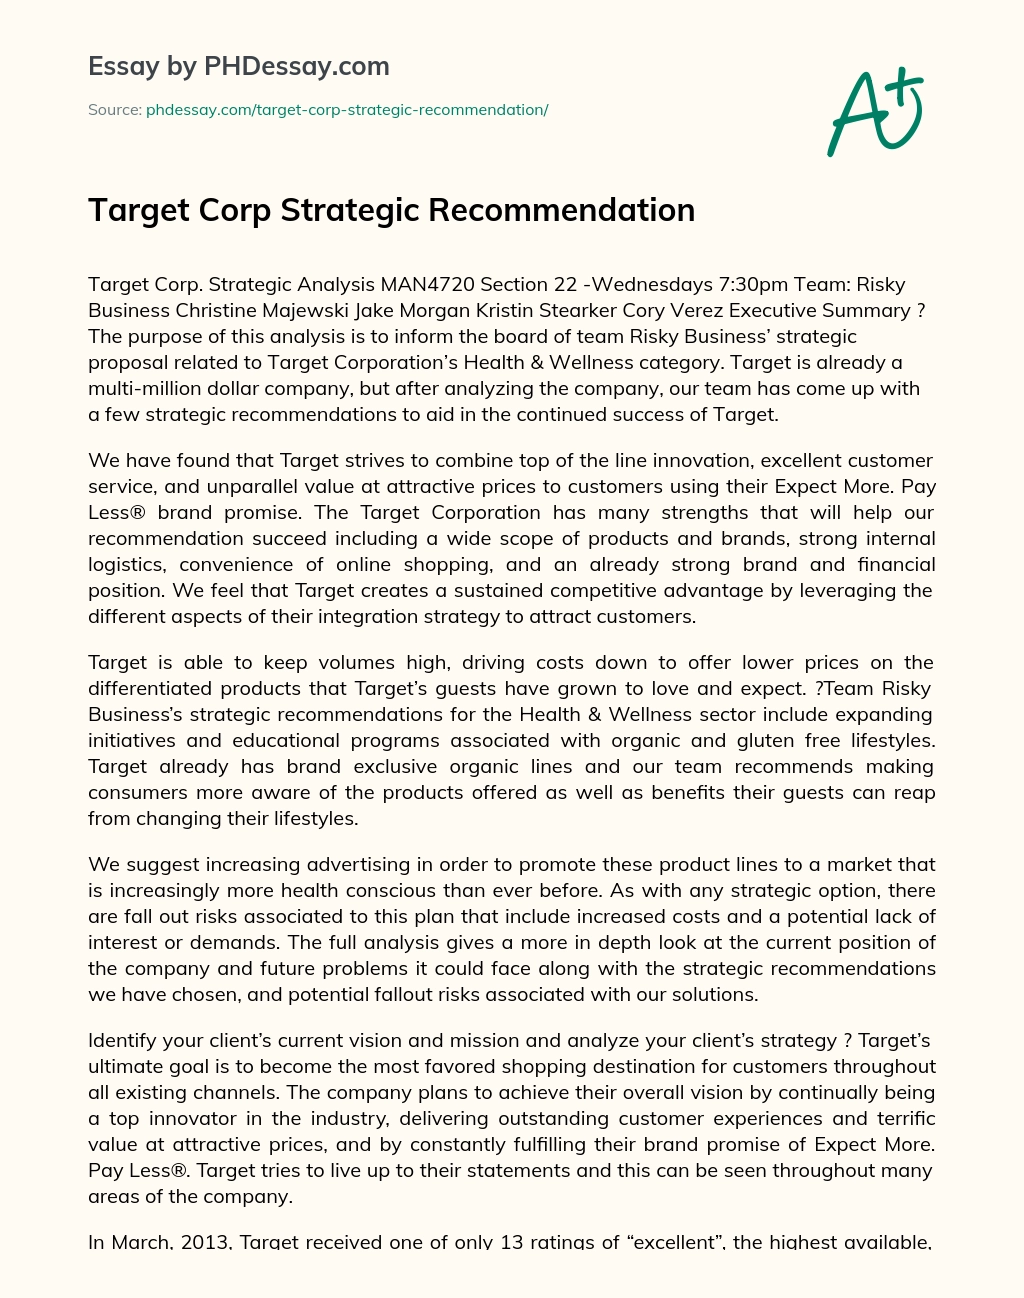 Target Corp Strategic Recommendation essay